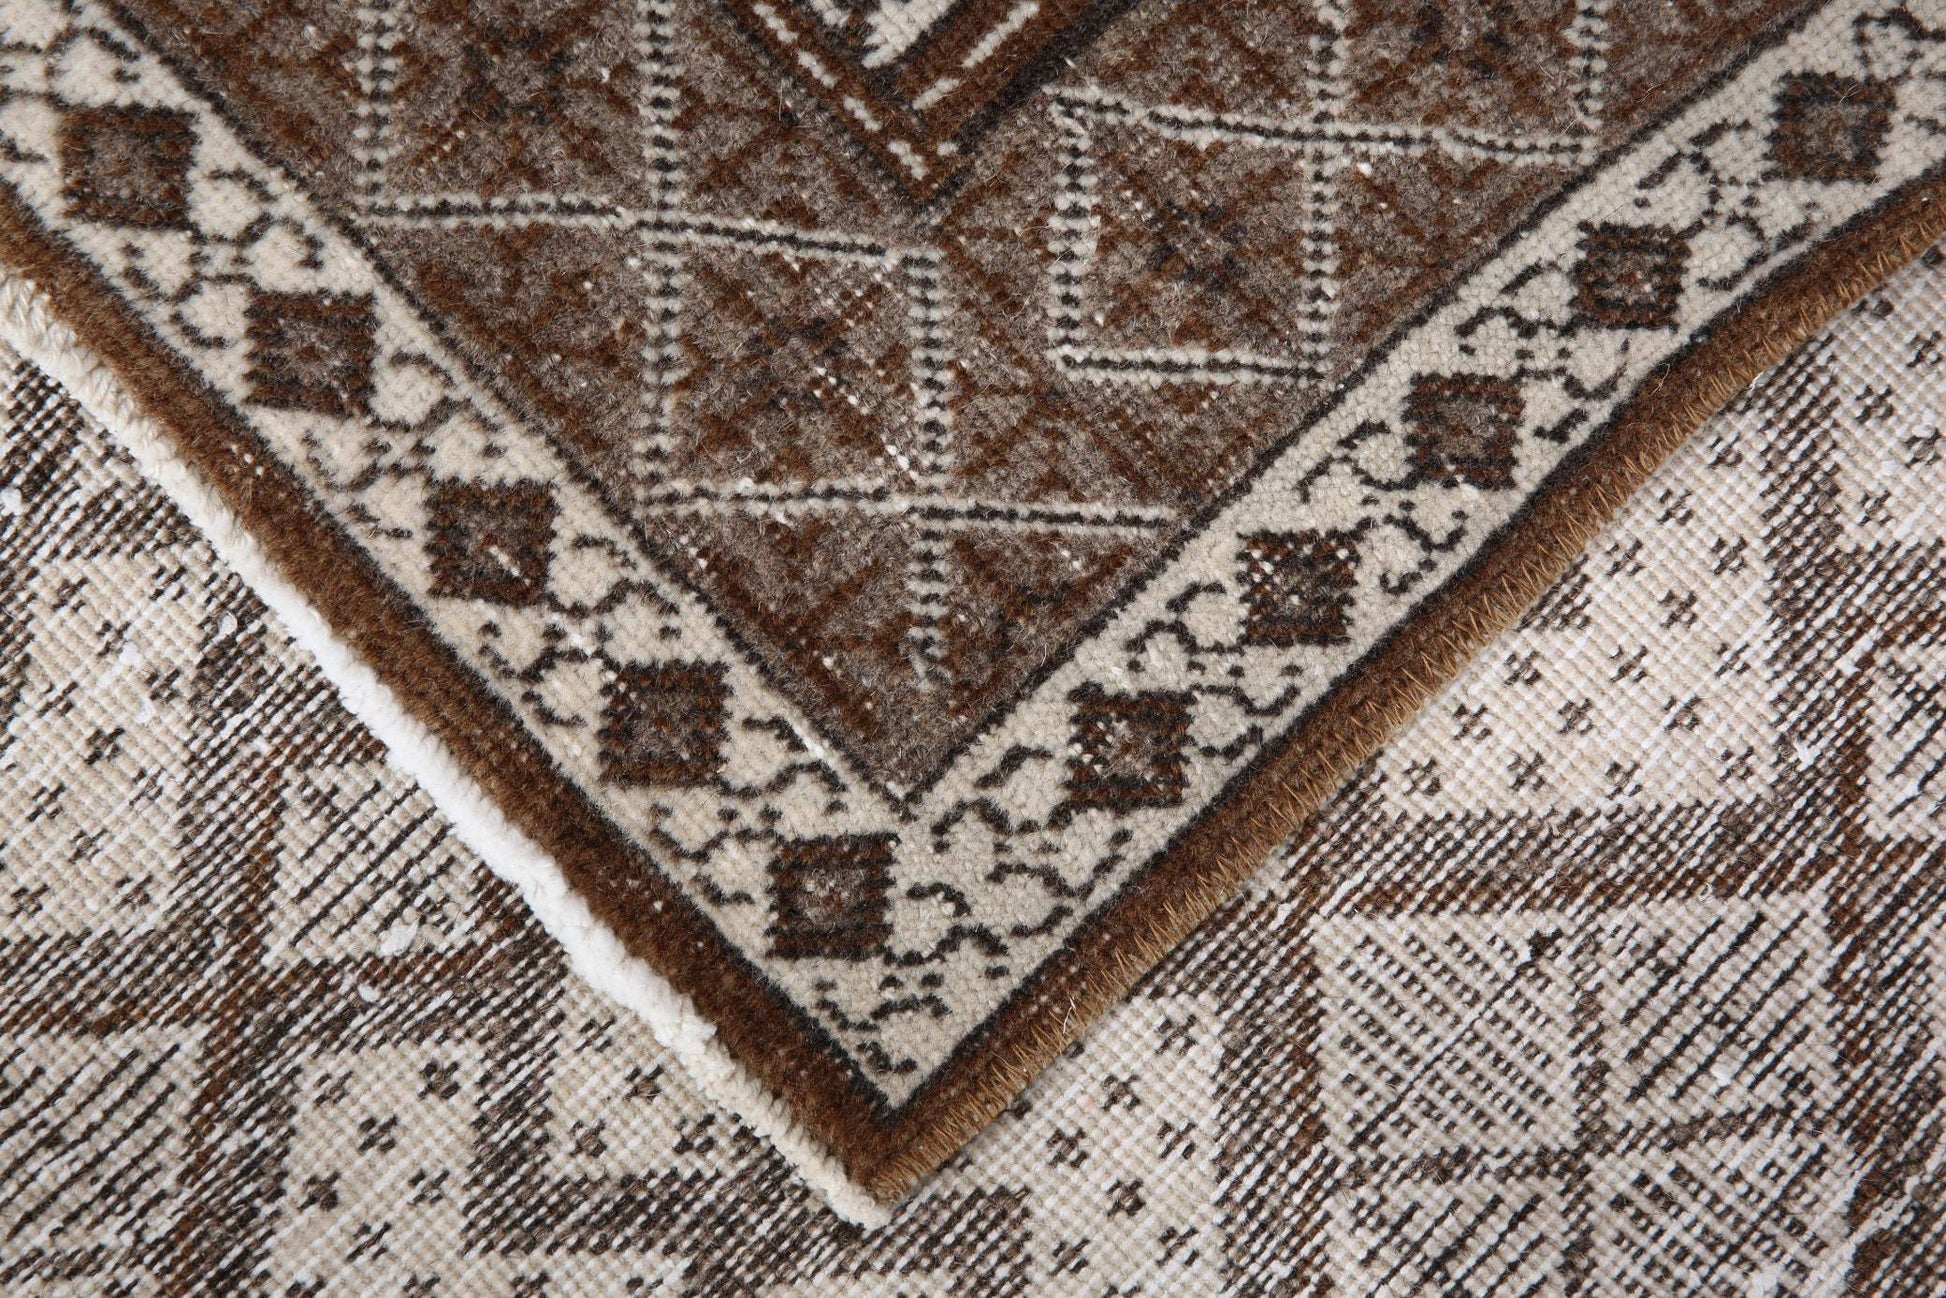 4' x 7' Brown Turkish Vintage Rug  |  RugReform